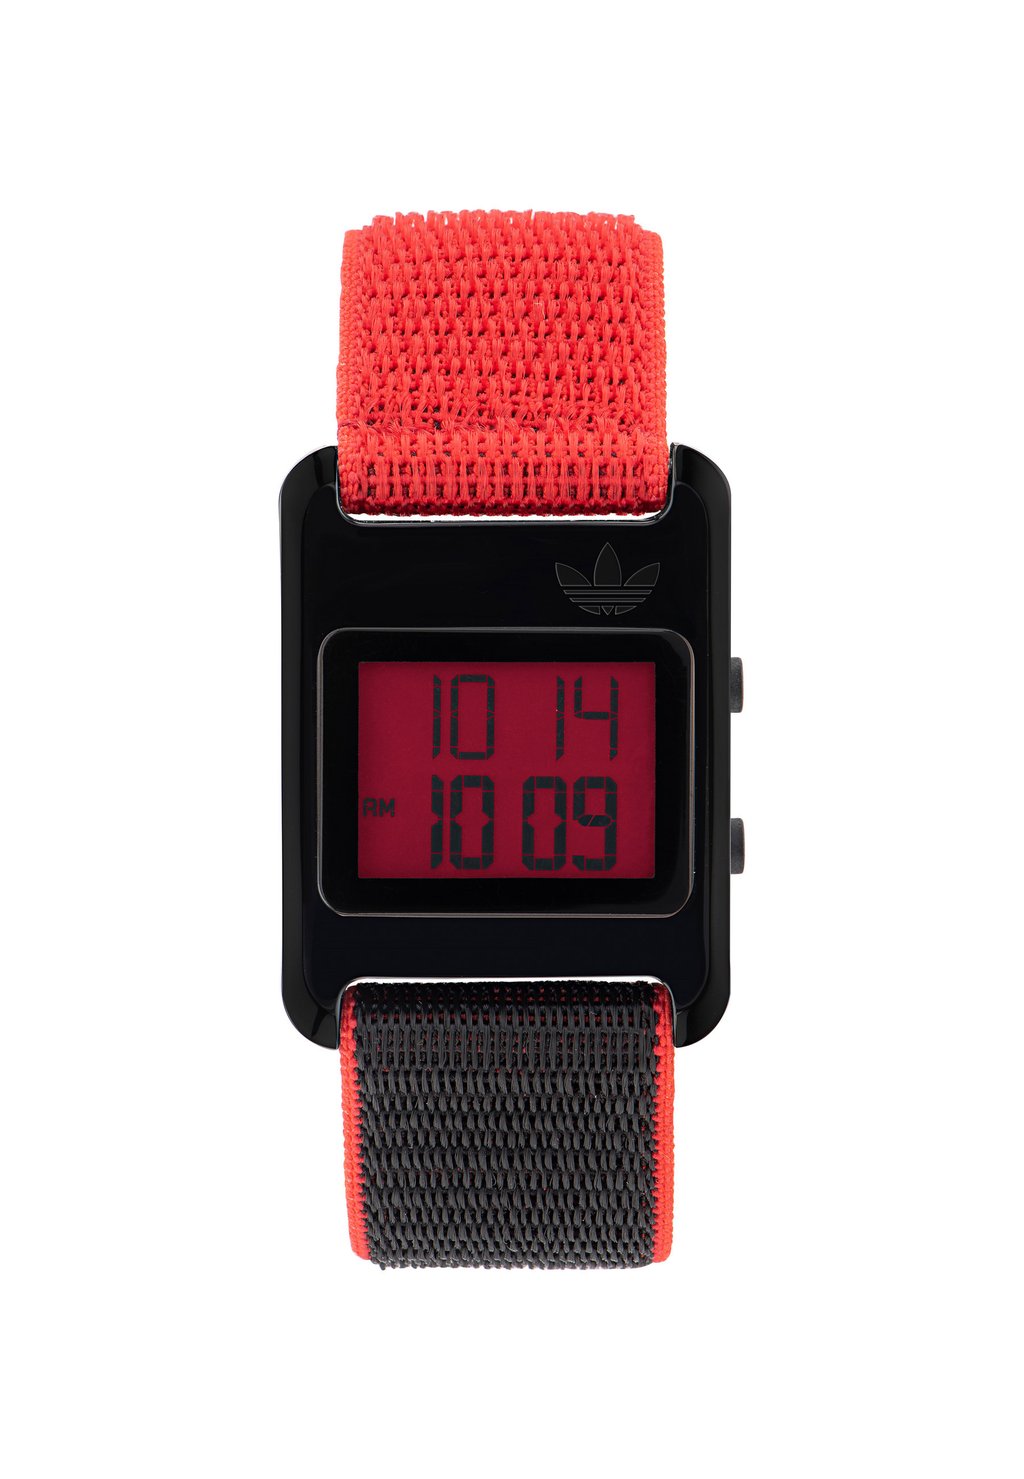 кухонный стол red and black 834 м11 Цифровые часы Retro Pop Digital adidas Originals, цвет black and red